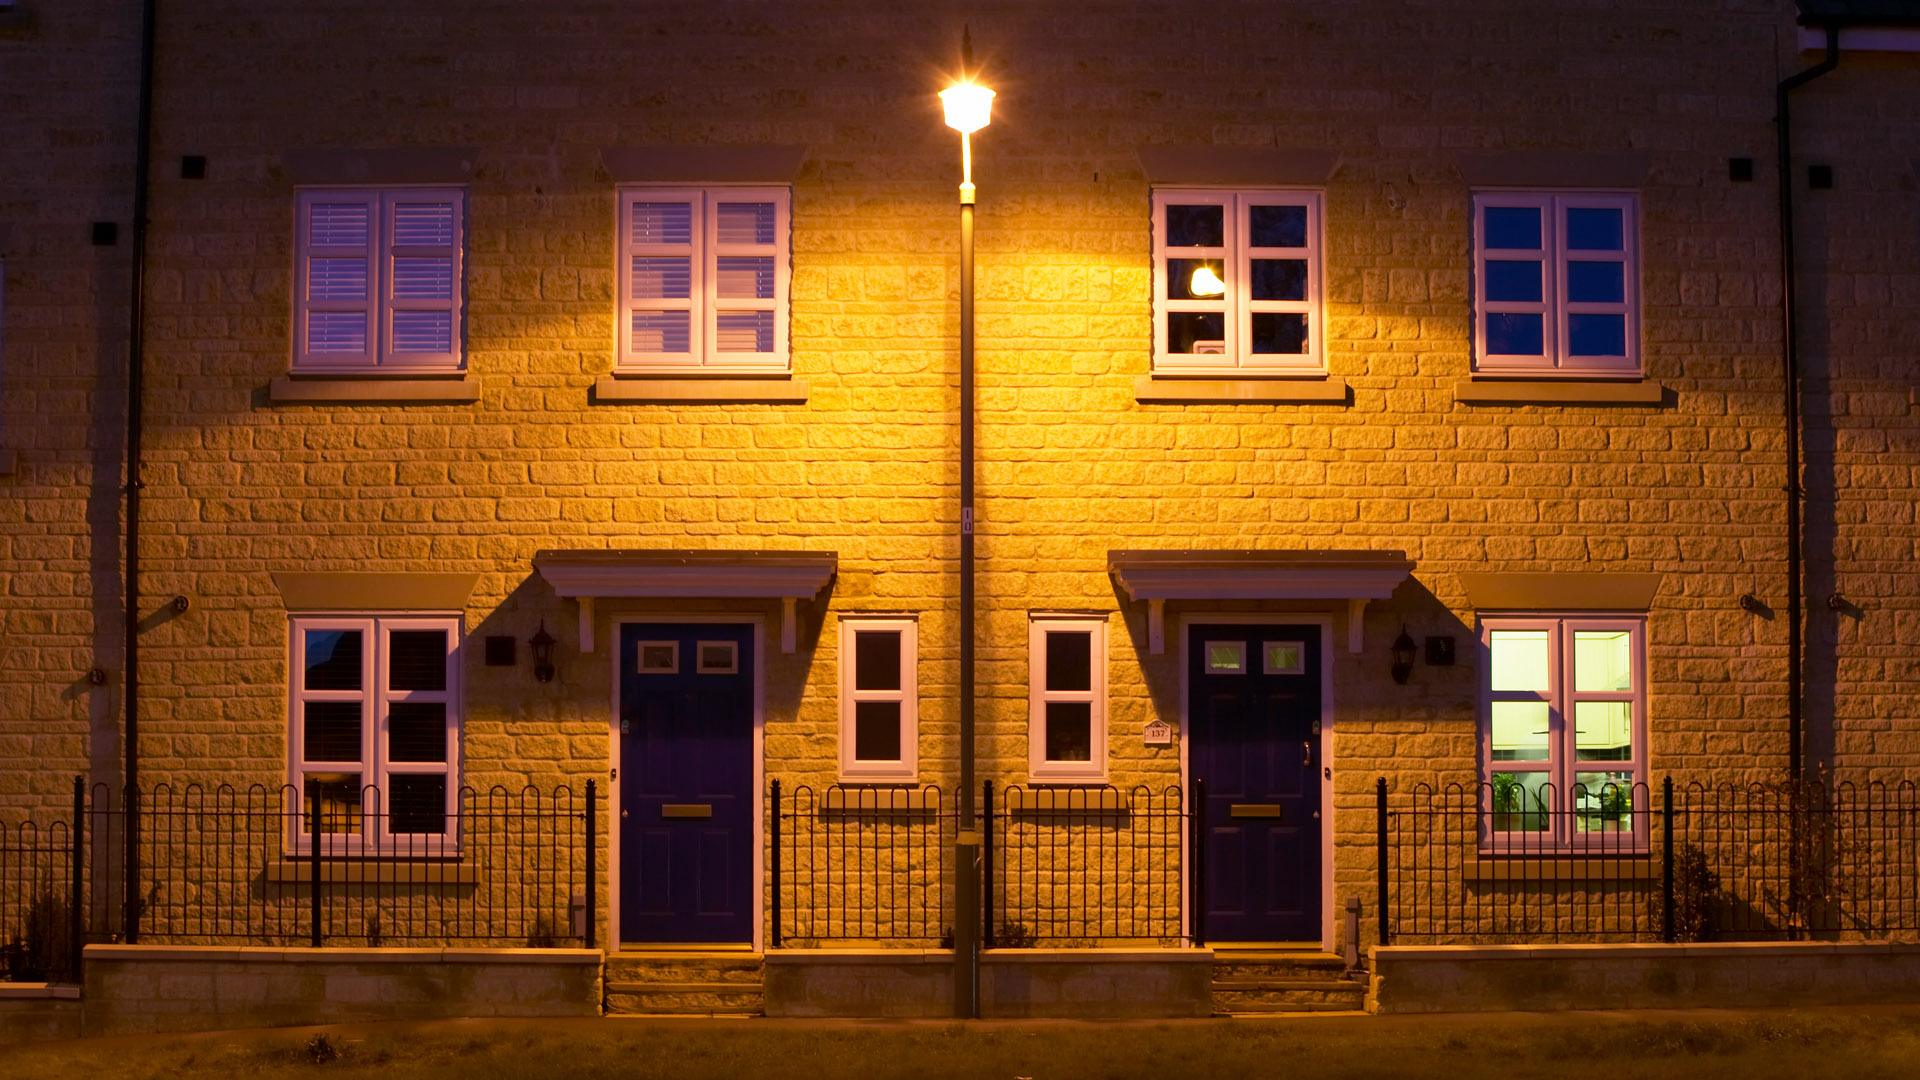 Iffley Heritage Street Lighting Location image 1920x1080px